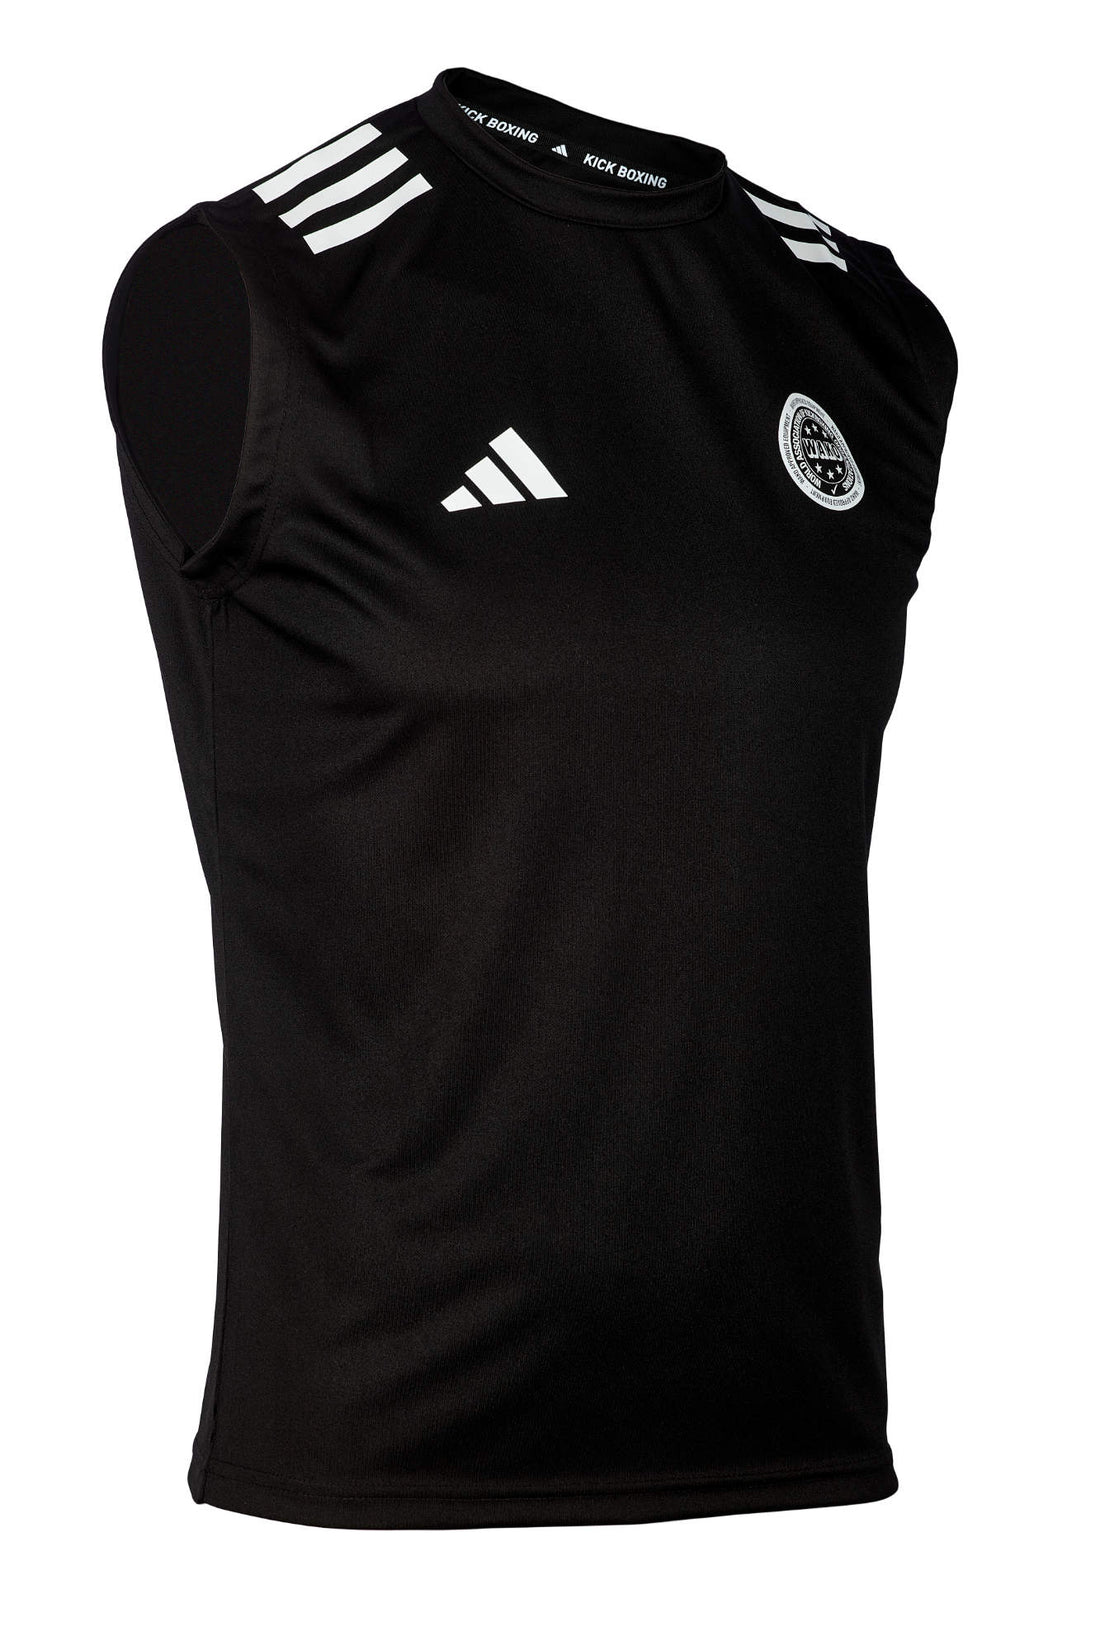 Adidas Kick Light adiWAKOST1 black sleeveless shirt designed for kickboxing, showcasing breathable, lightweight fabric on a plain background